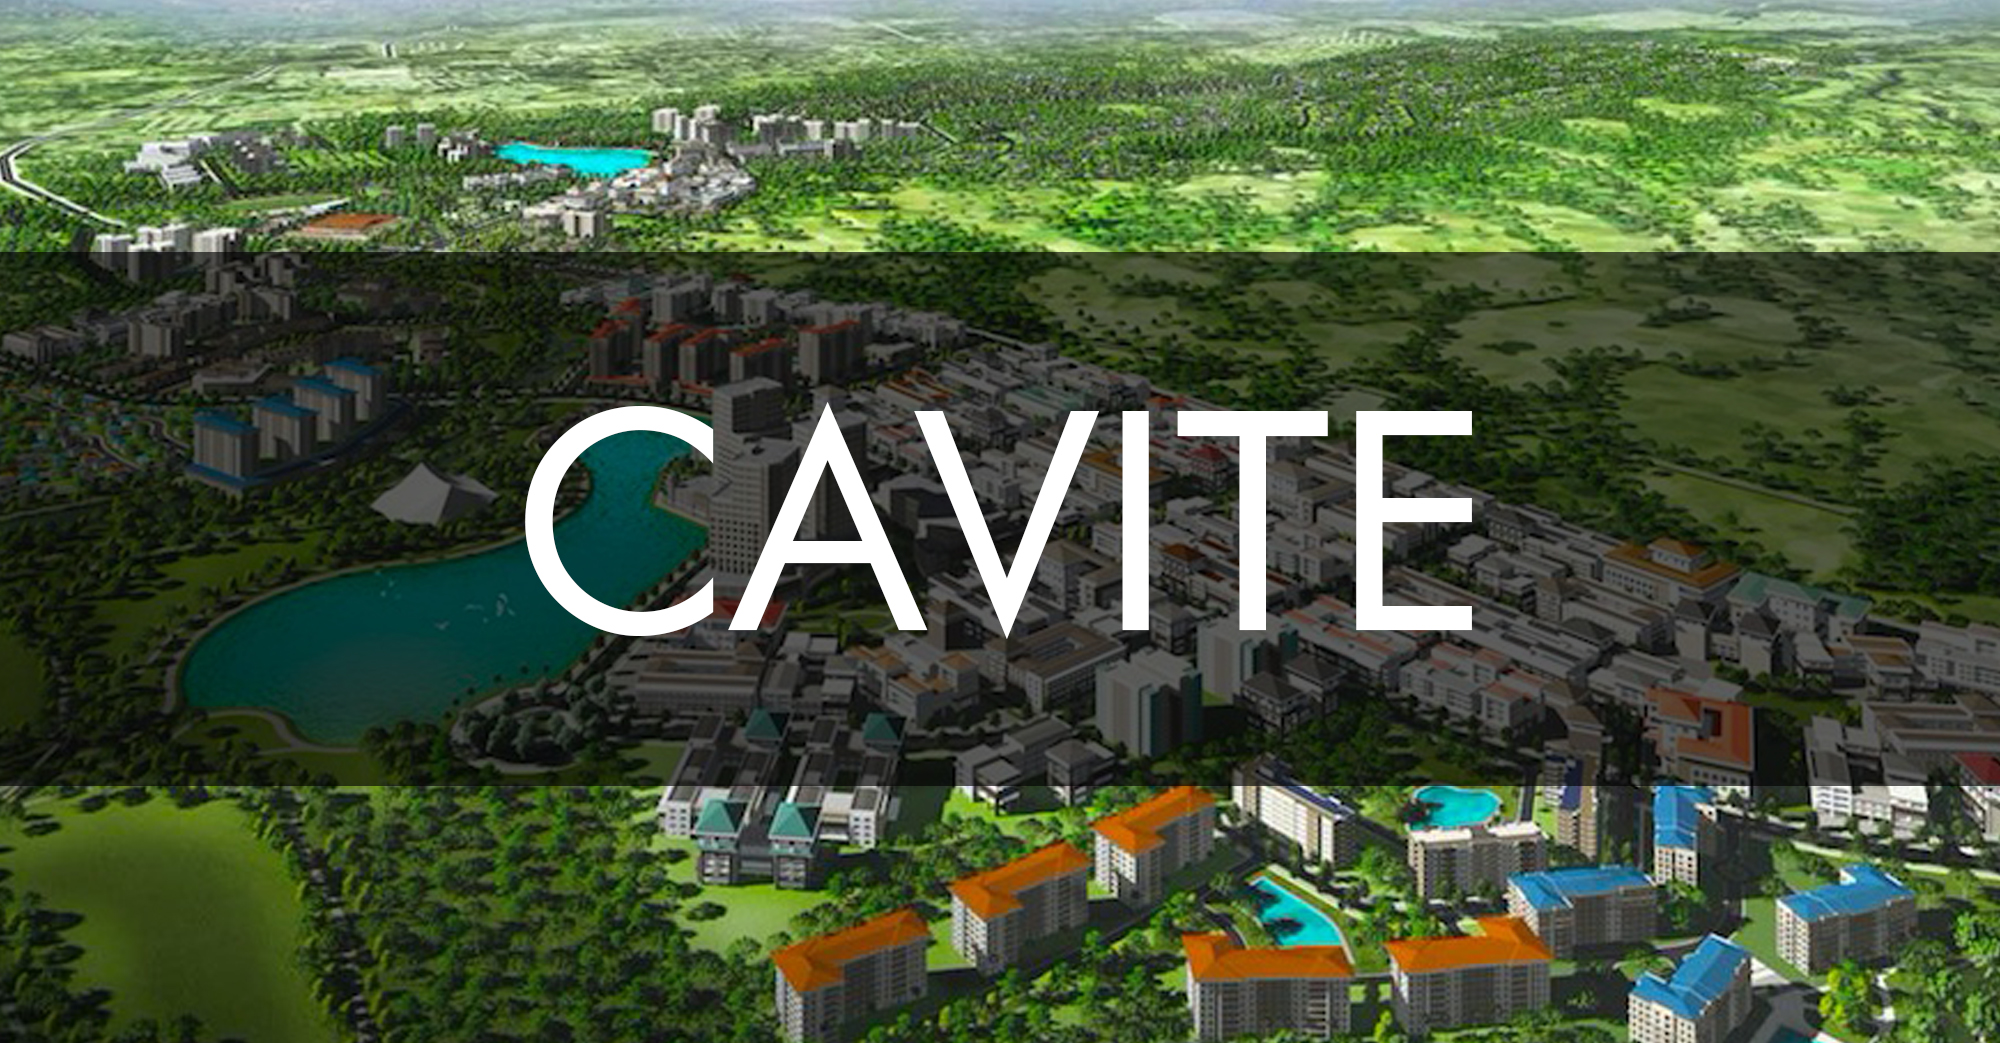 1-Cavite